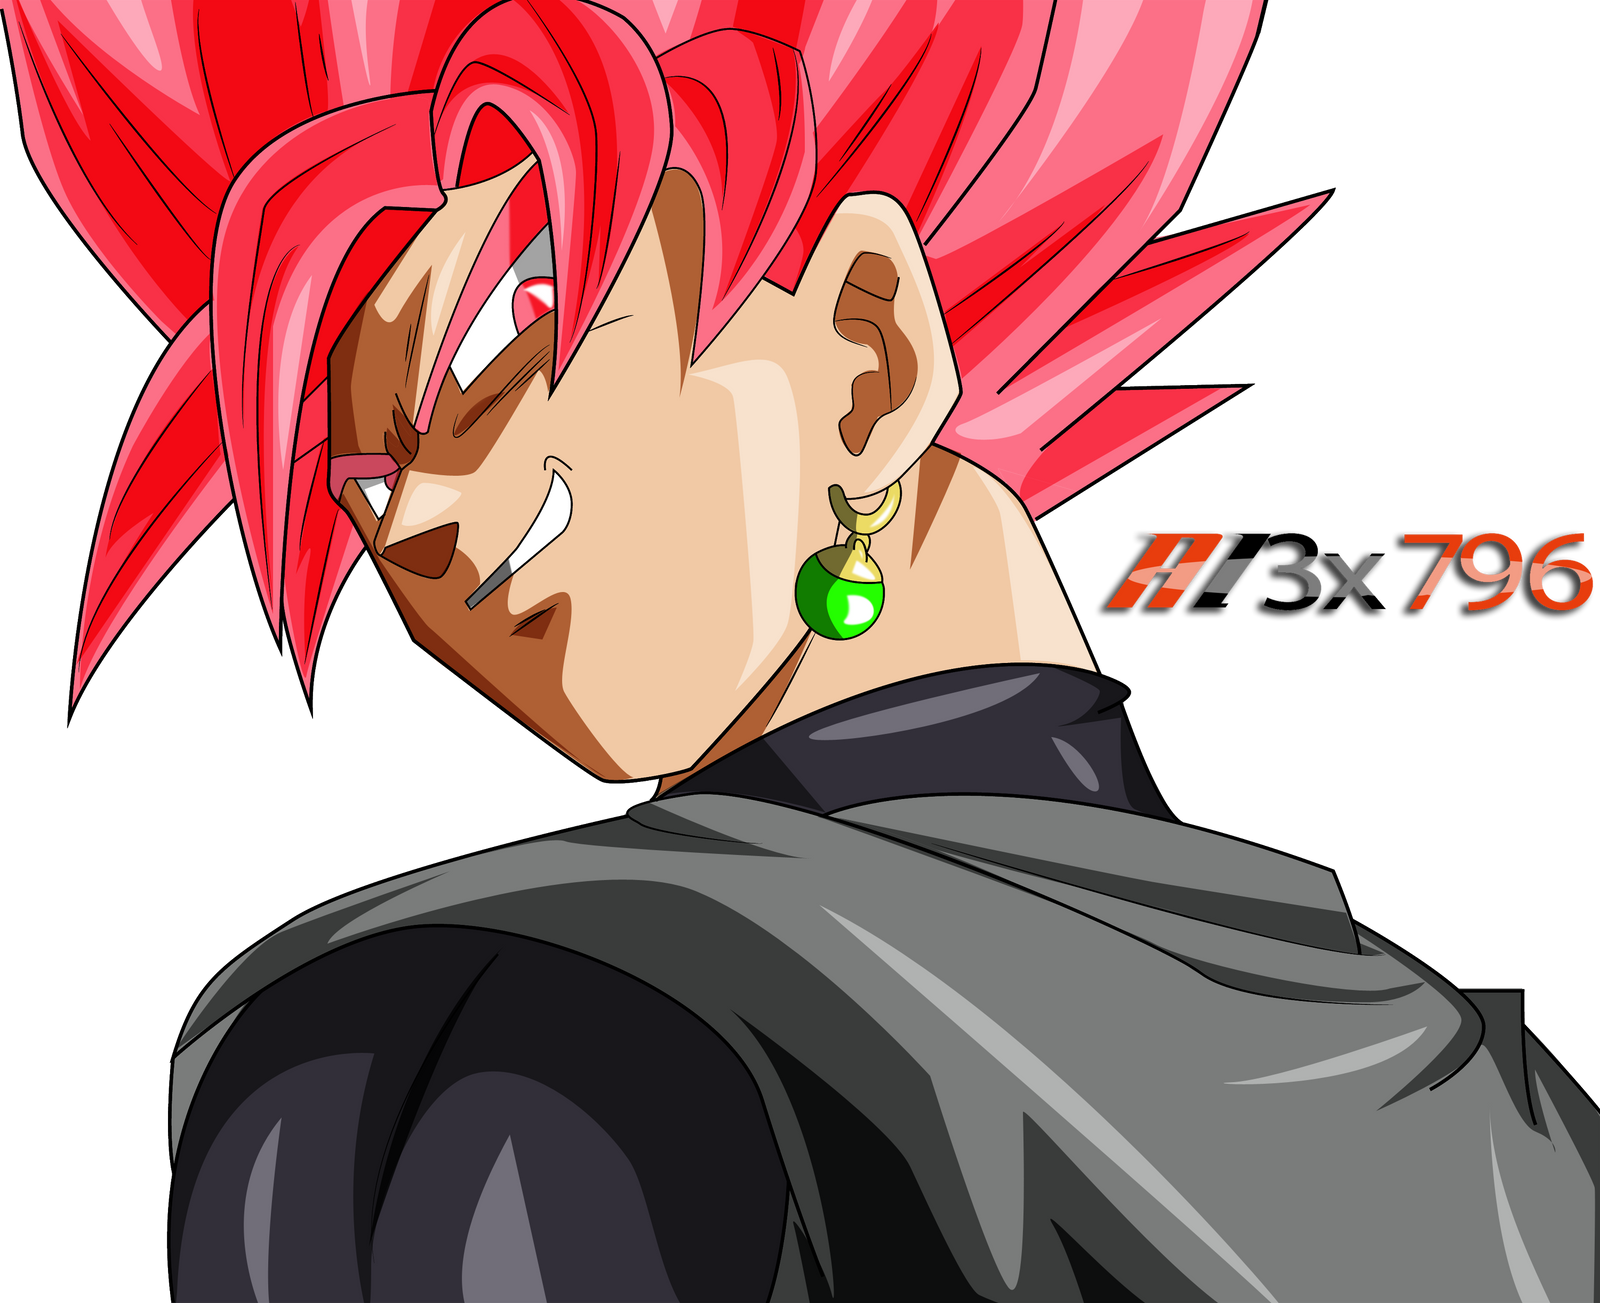 Black Goku pink hair evil glare palette 1 by AL3X796 on.